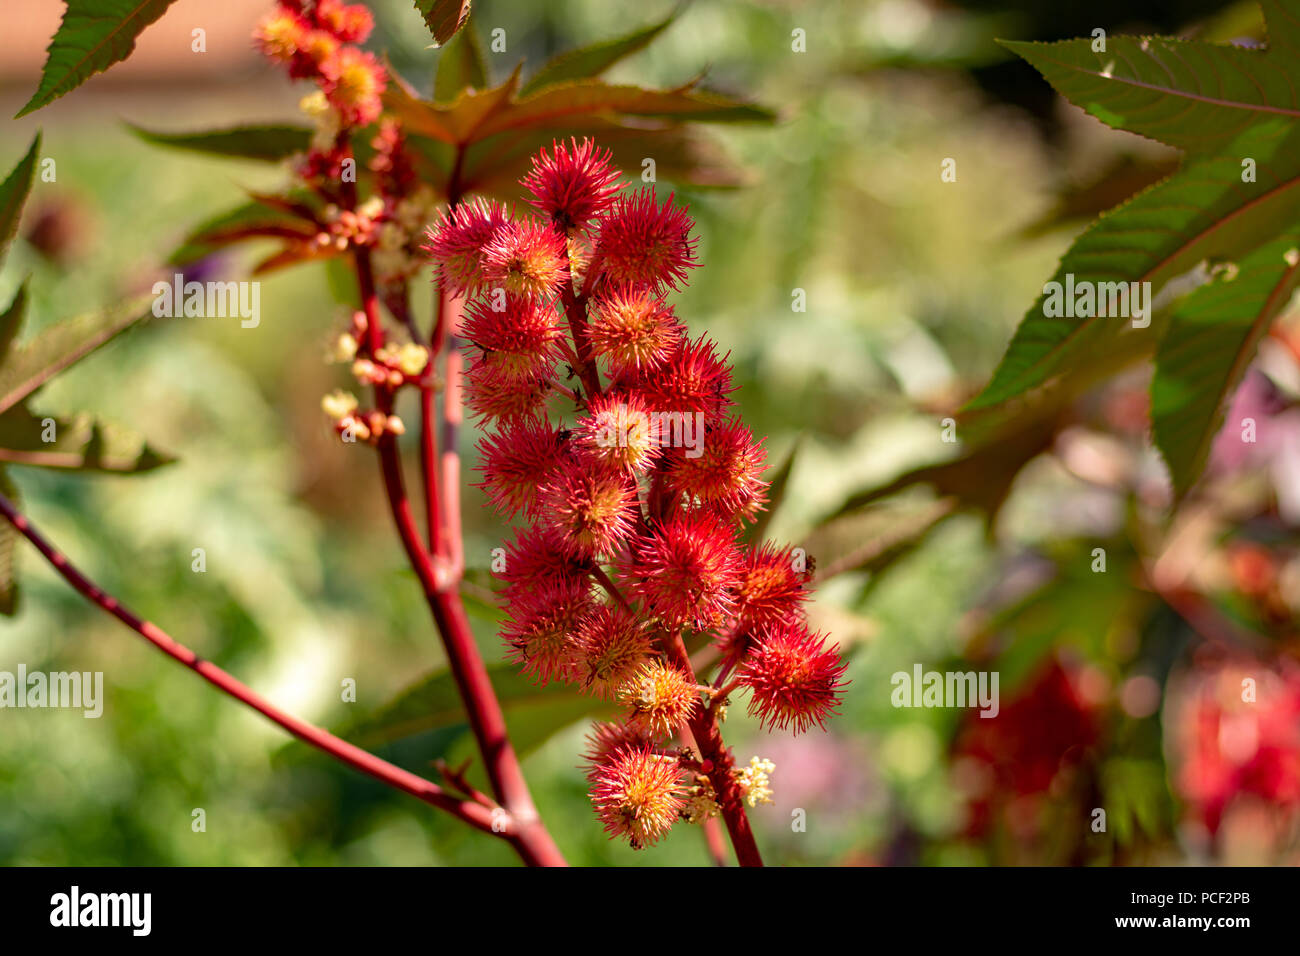 Ricinus communis or castor bean poisoning and medical plant, source of castor oil Stock Photo